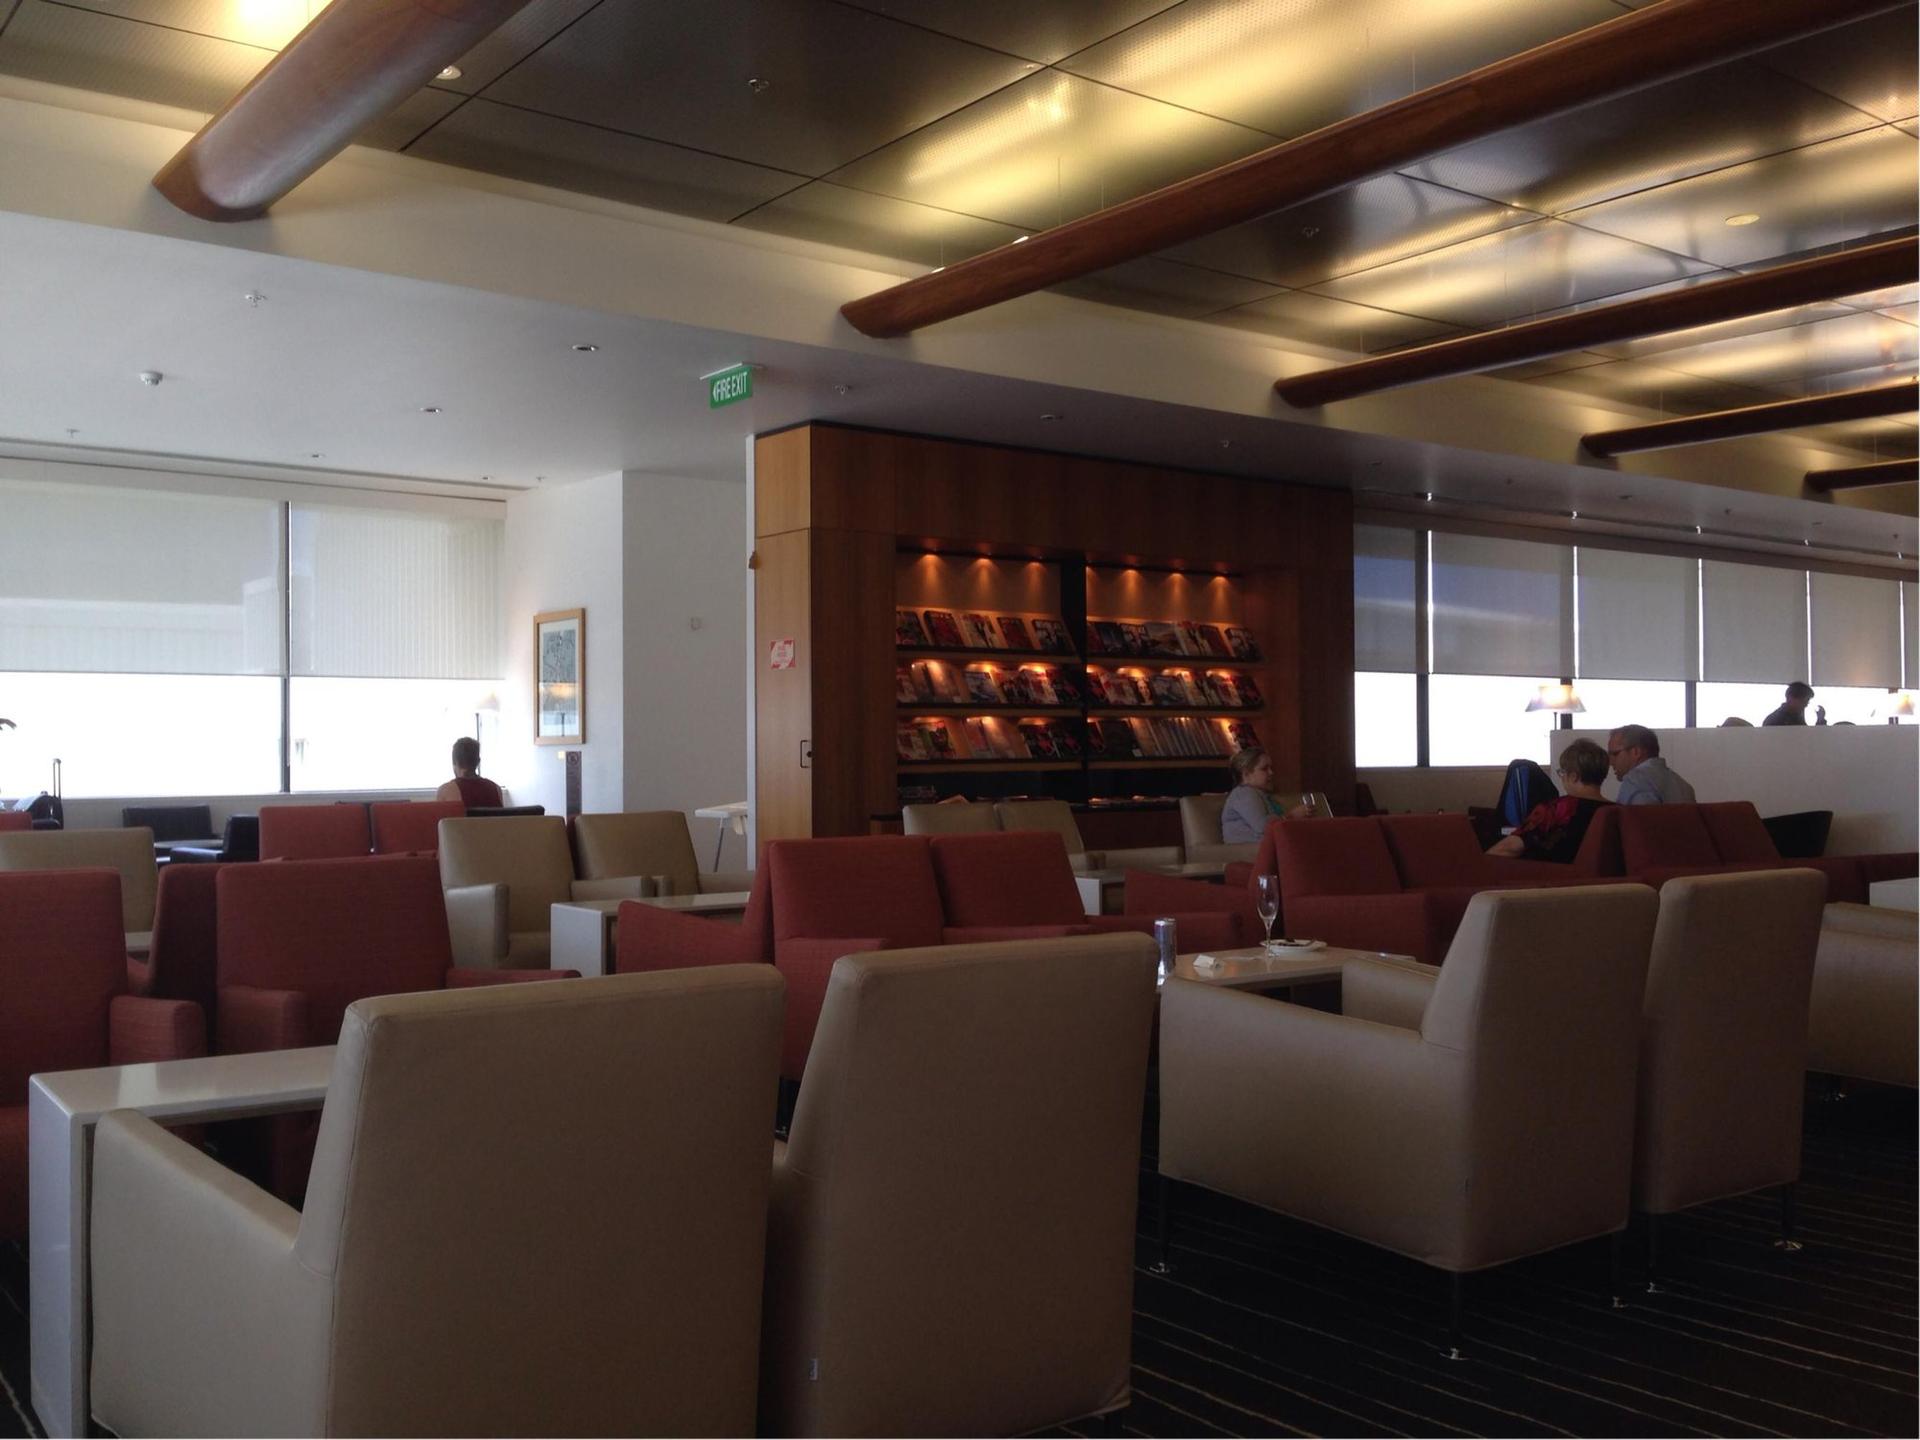 Qantas Airways International Business Lounge image 2 of 37